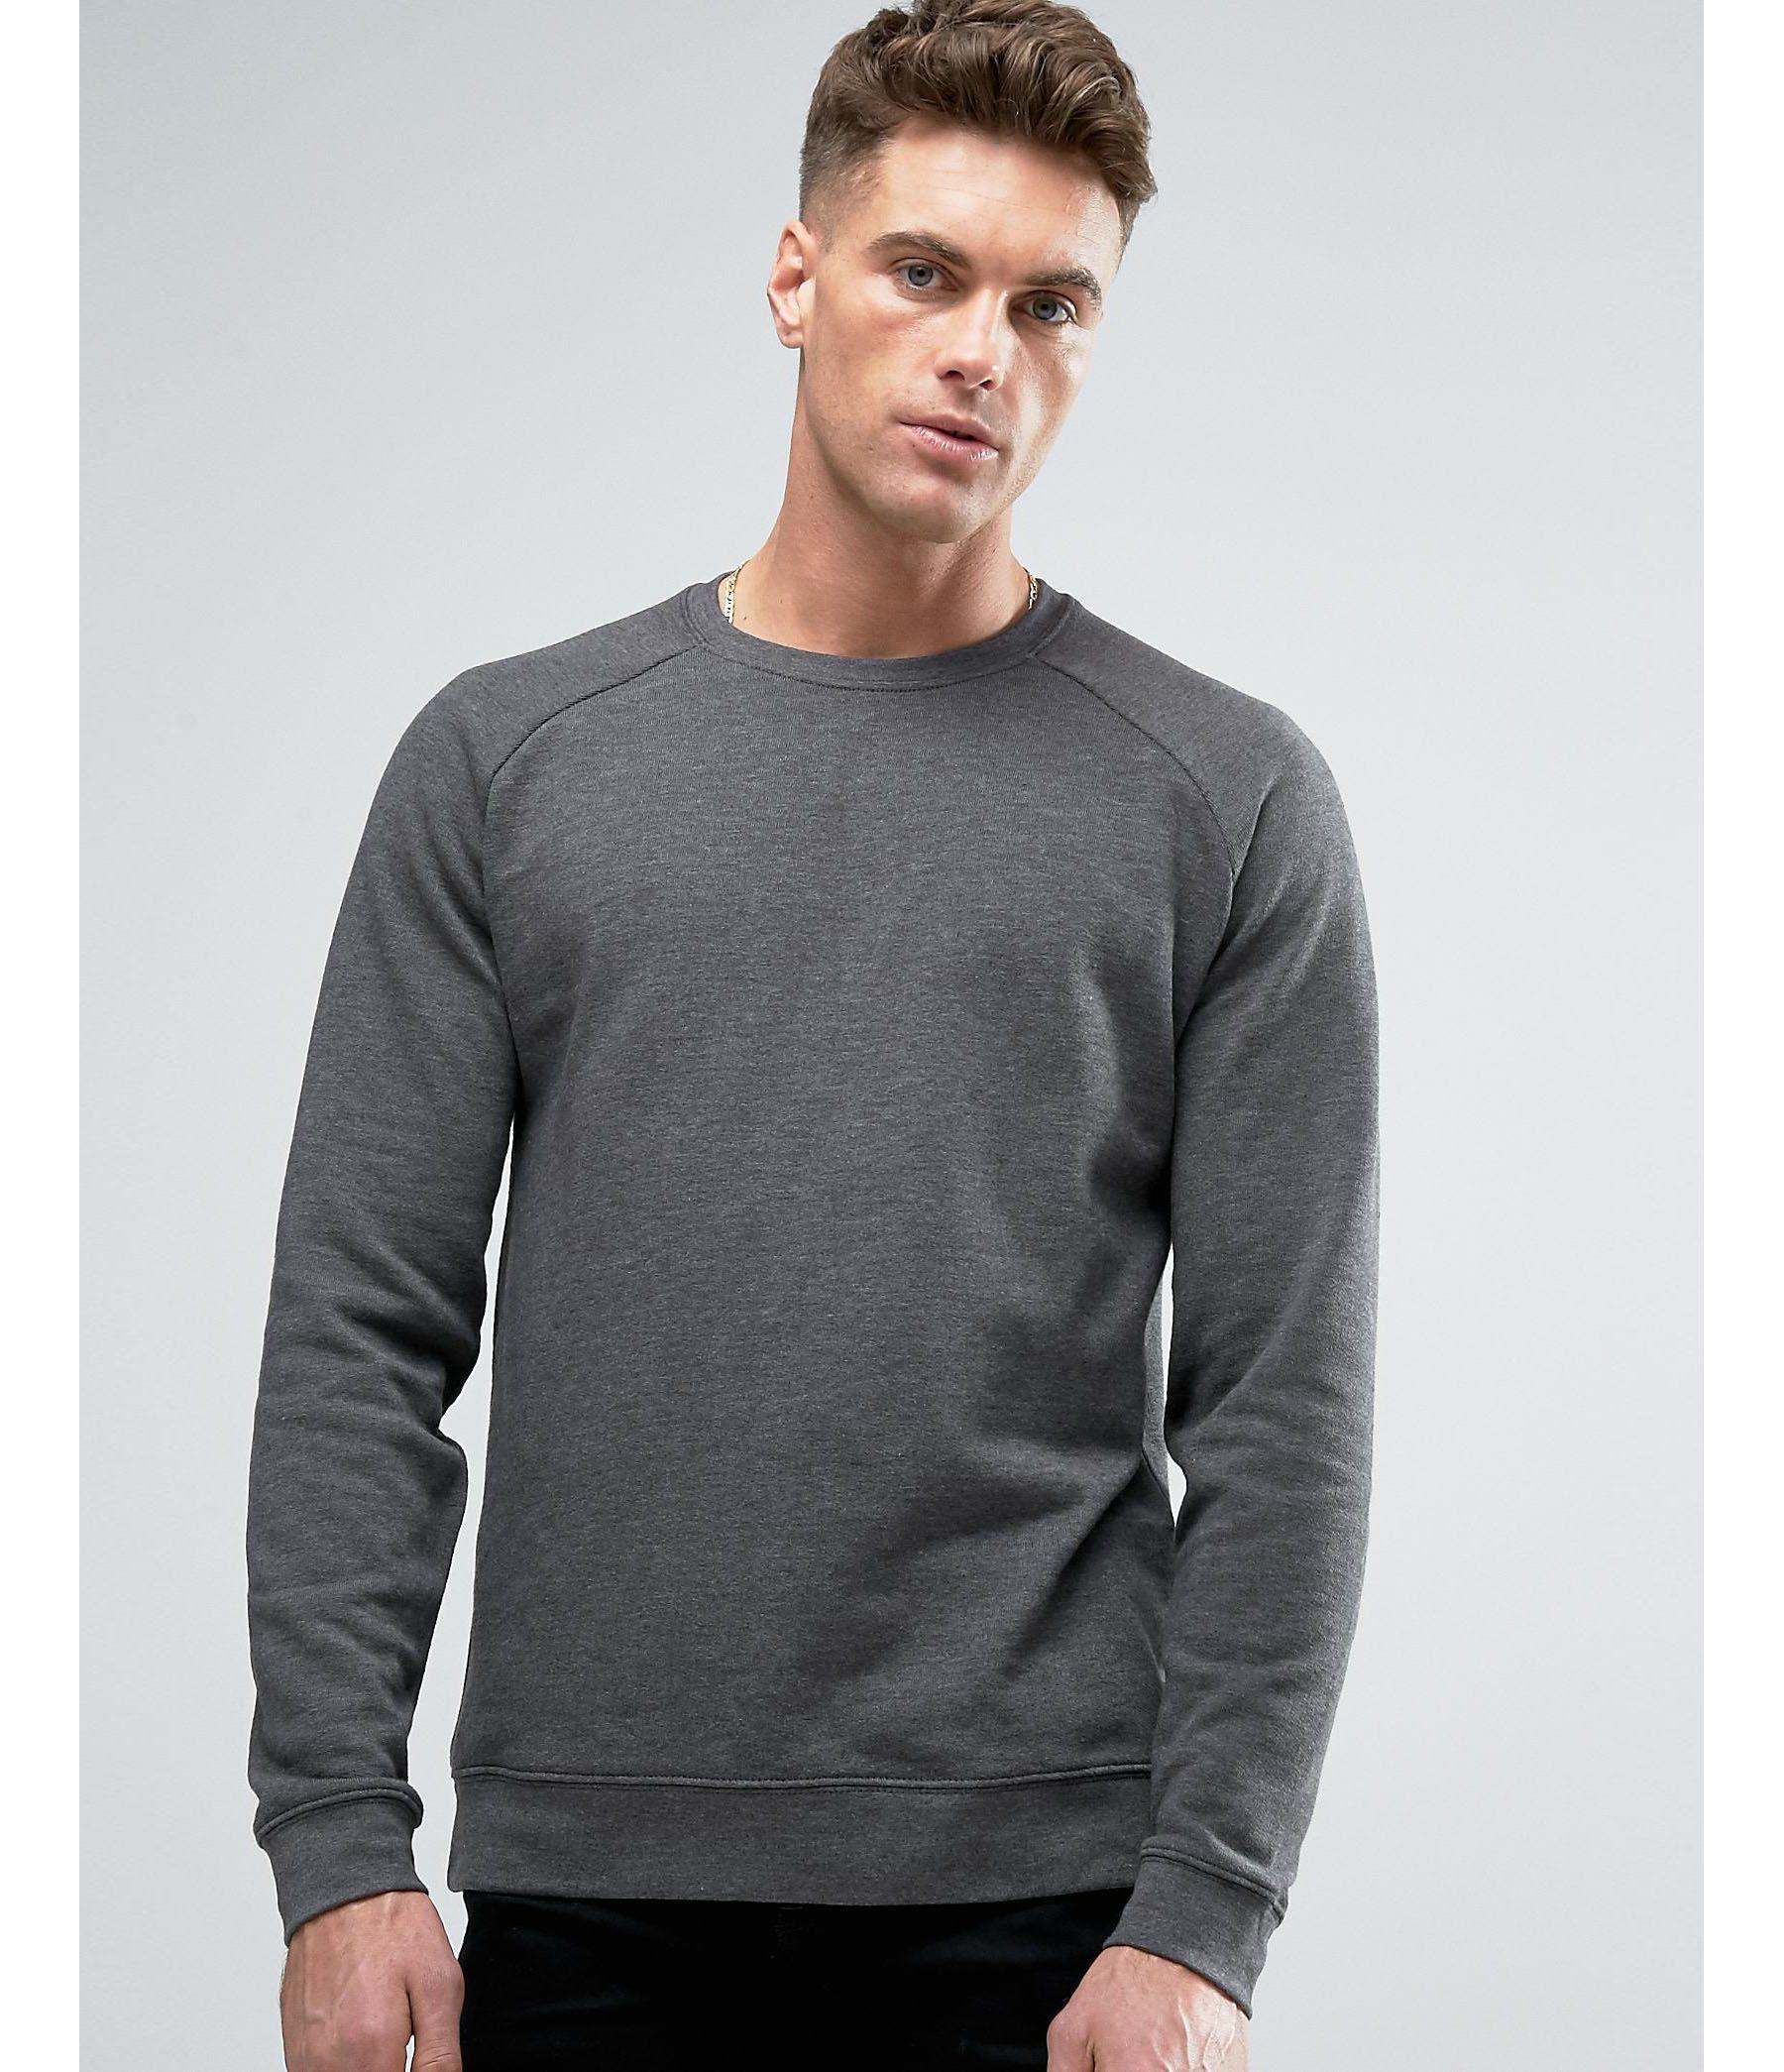 Lyst - Asos Sweatshirt In Charcoal in Gray for Men - Save 4%